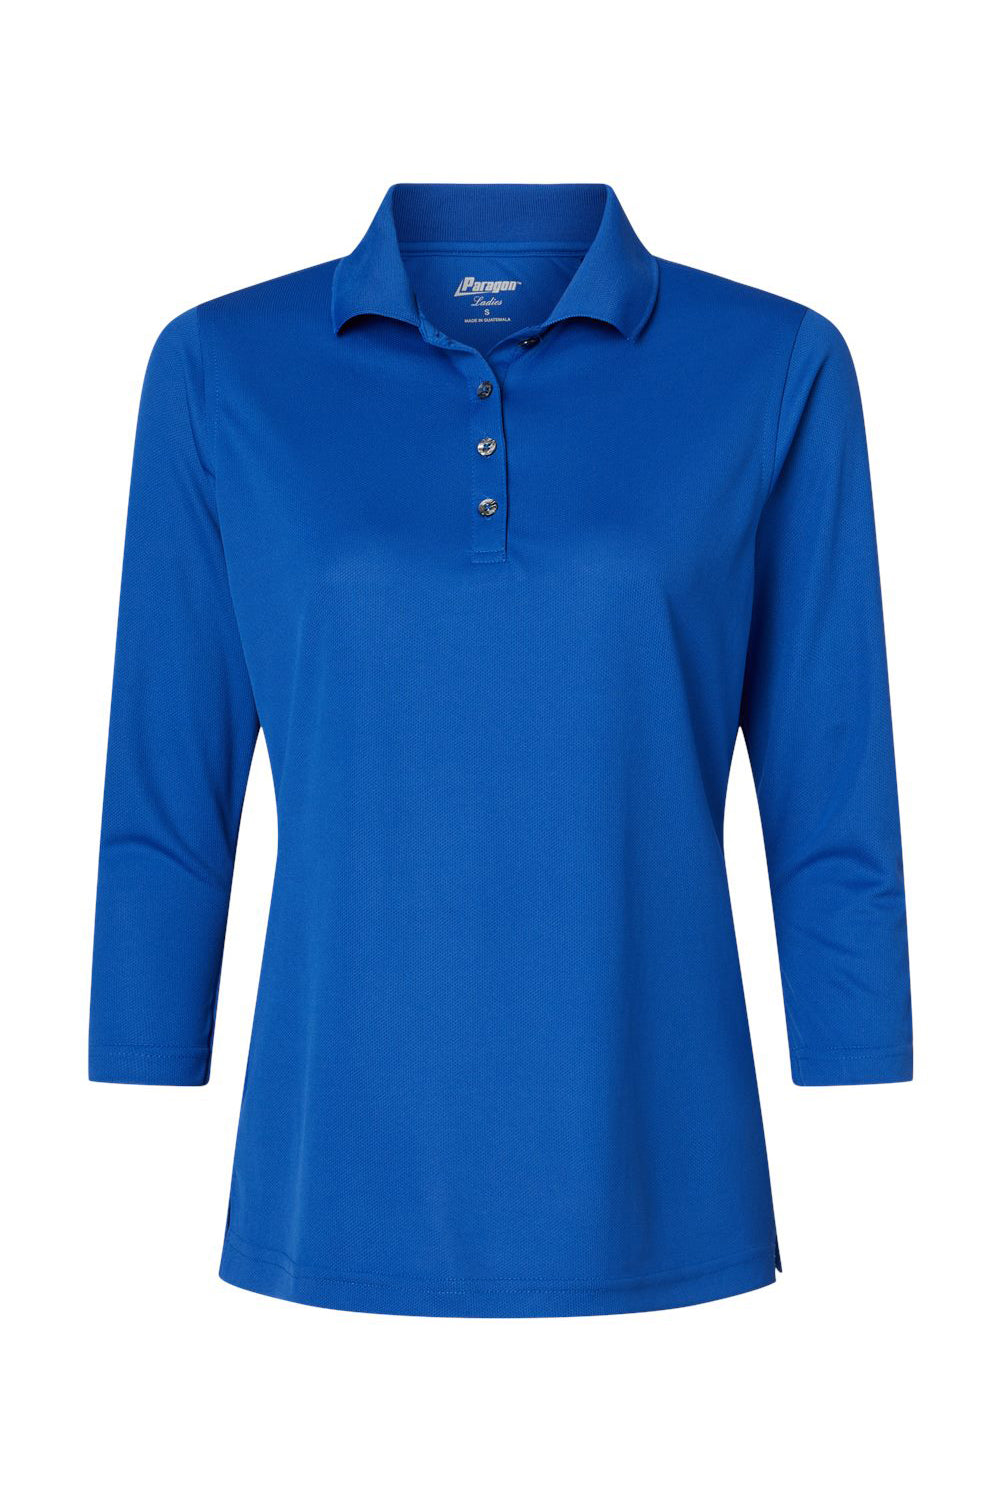 Paragon 120 Womens Lady Palm 3/4 Sleeve Polo Shirt Royal Blue Flat Front